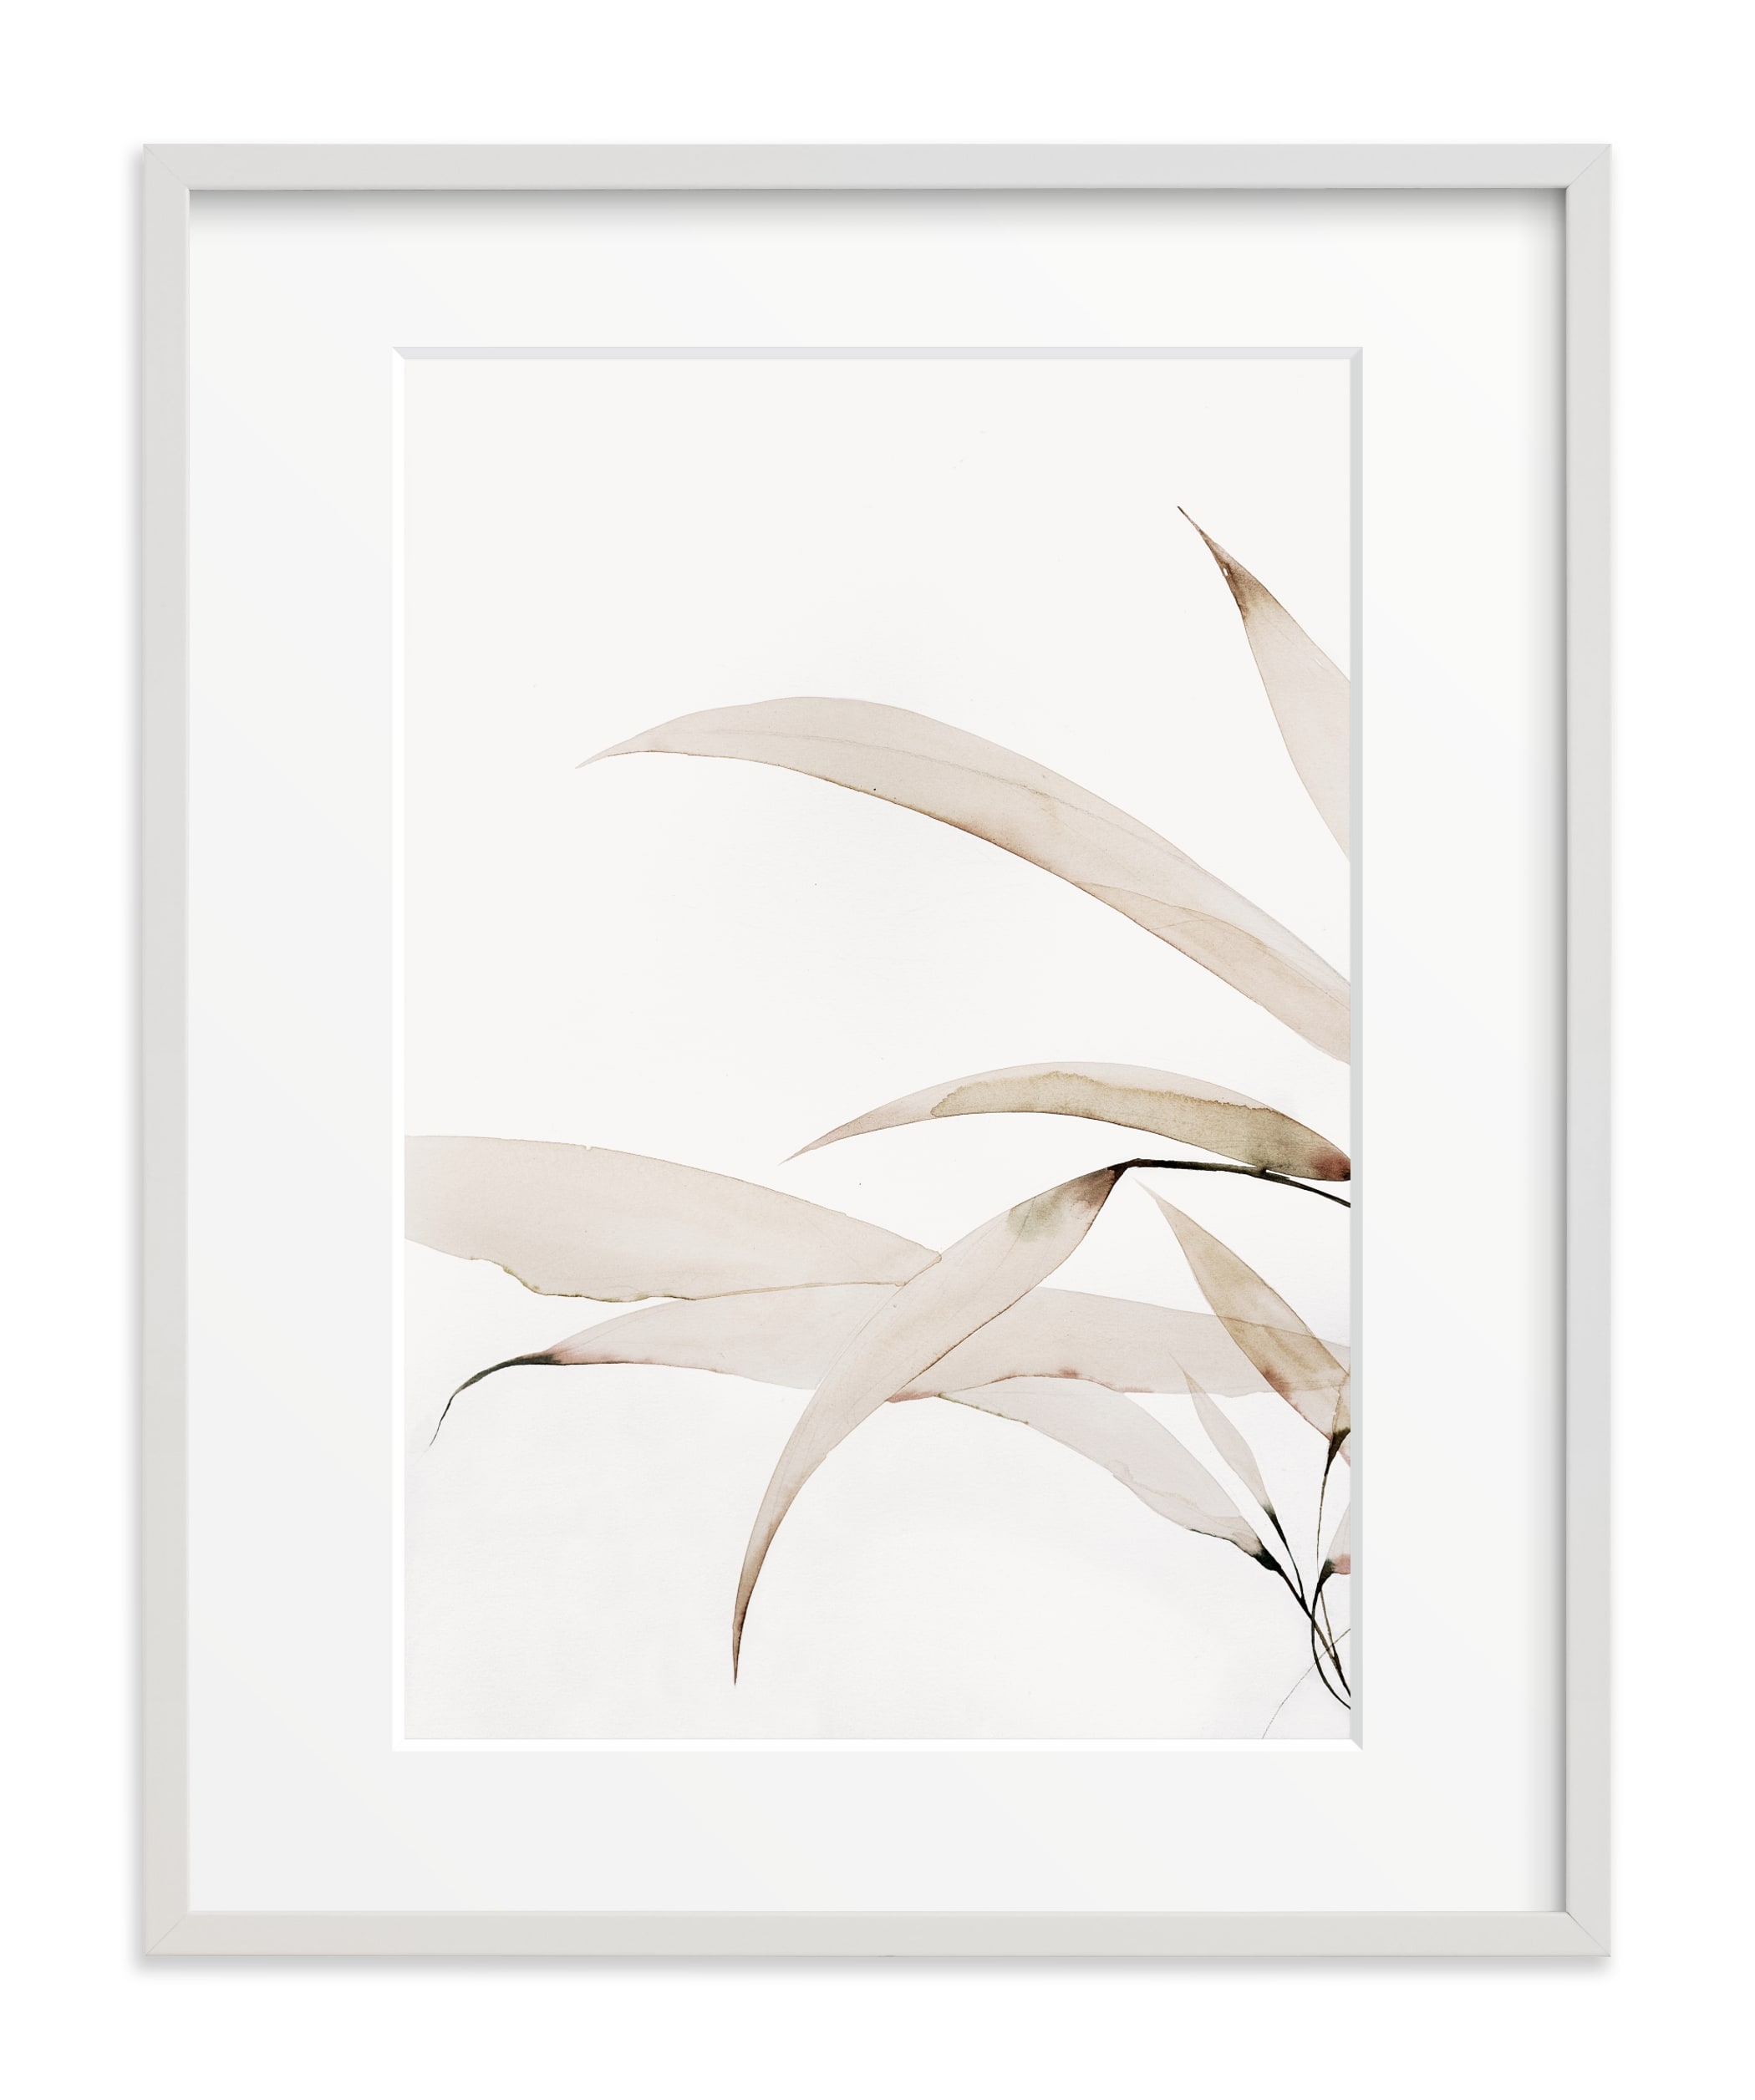 Mogna01 / White Wood Frame / 25.25" X 31.25" - Image 0